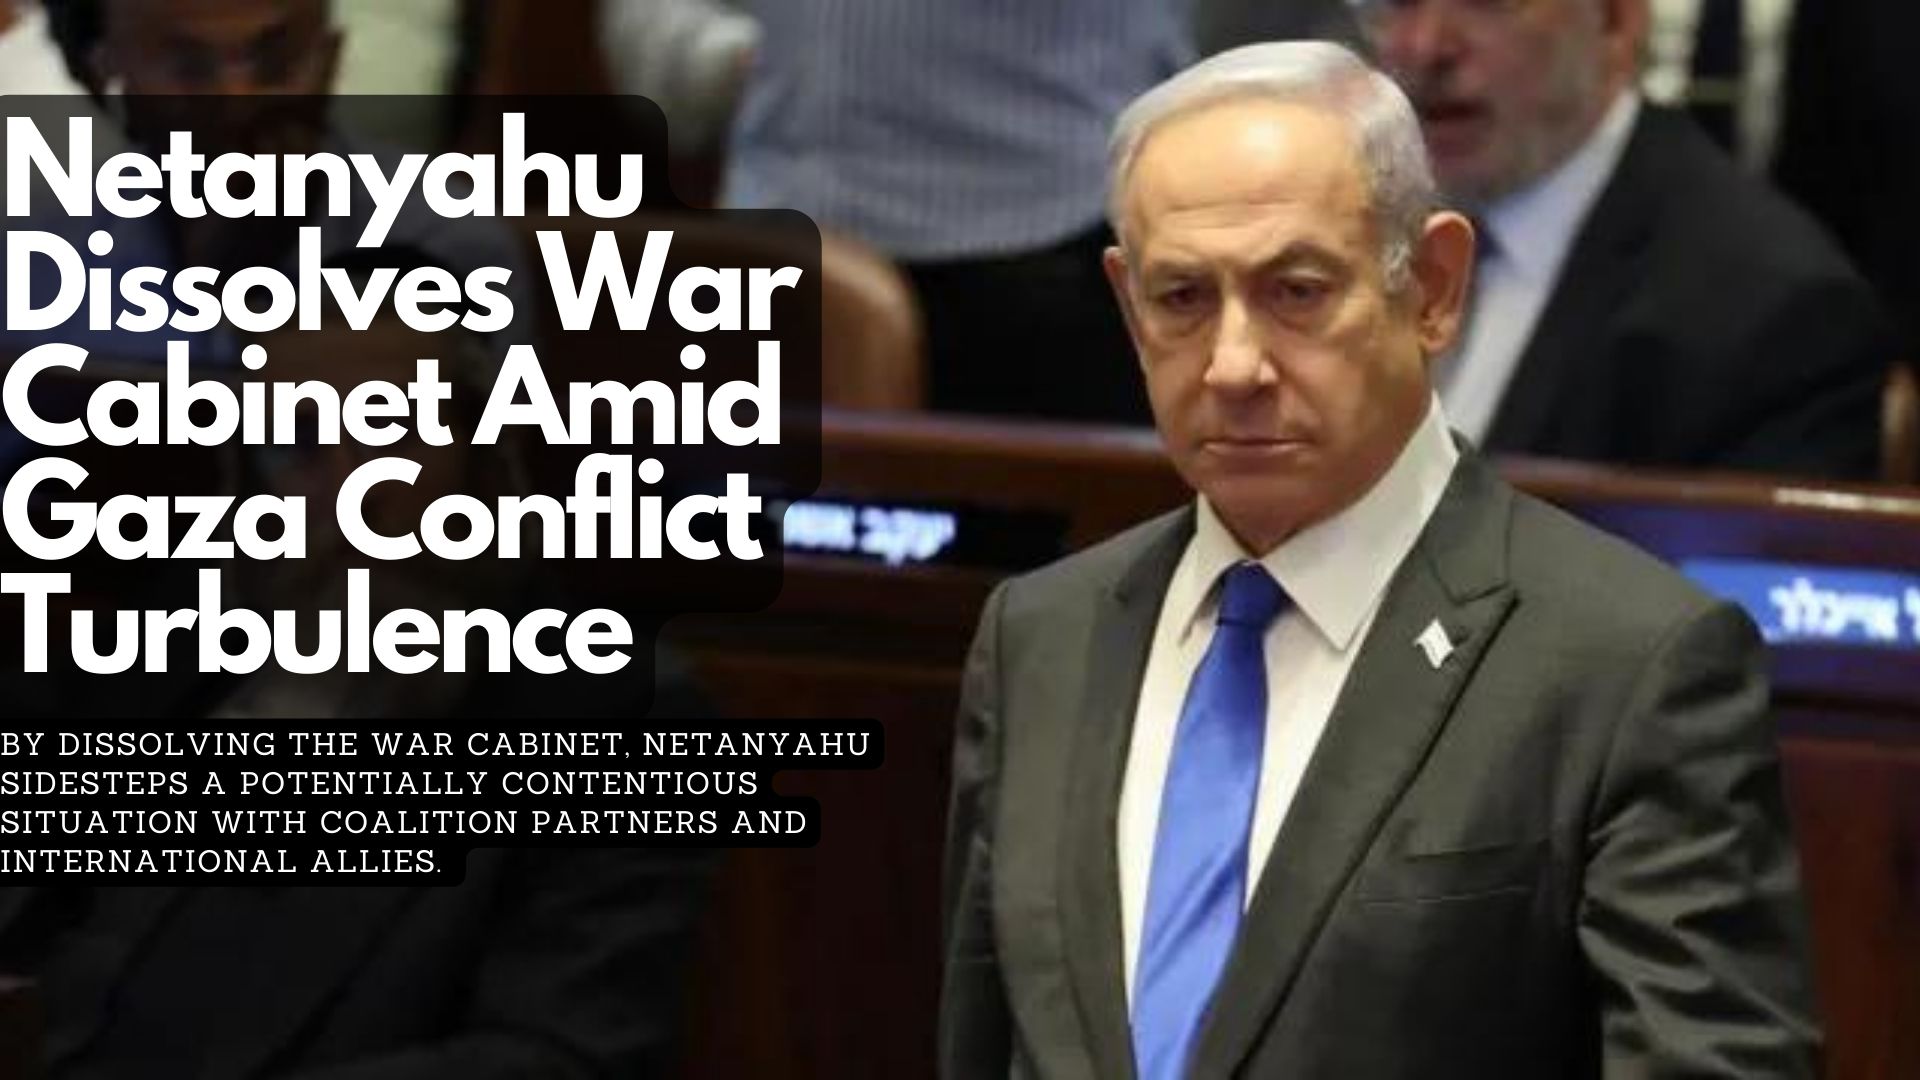 Netanyahu Dissolves War Cabinet Amid Gaza Conflict Turbulence